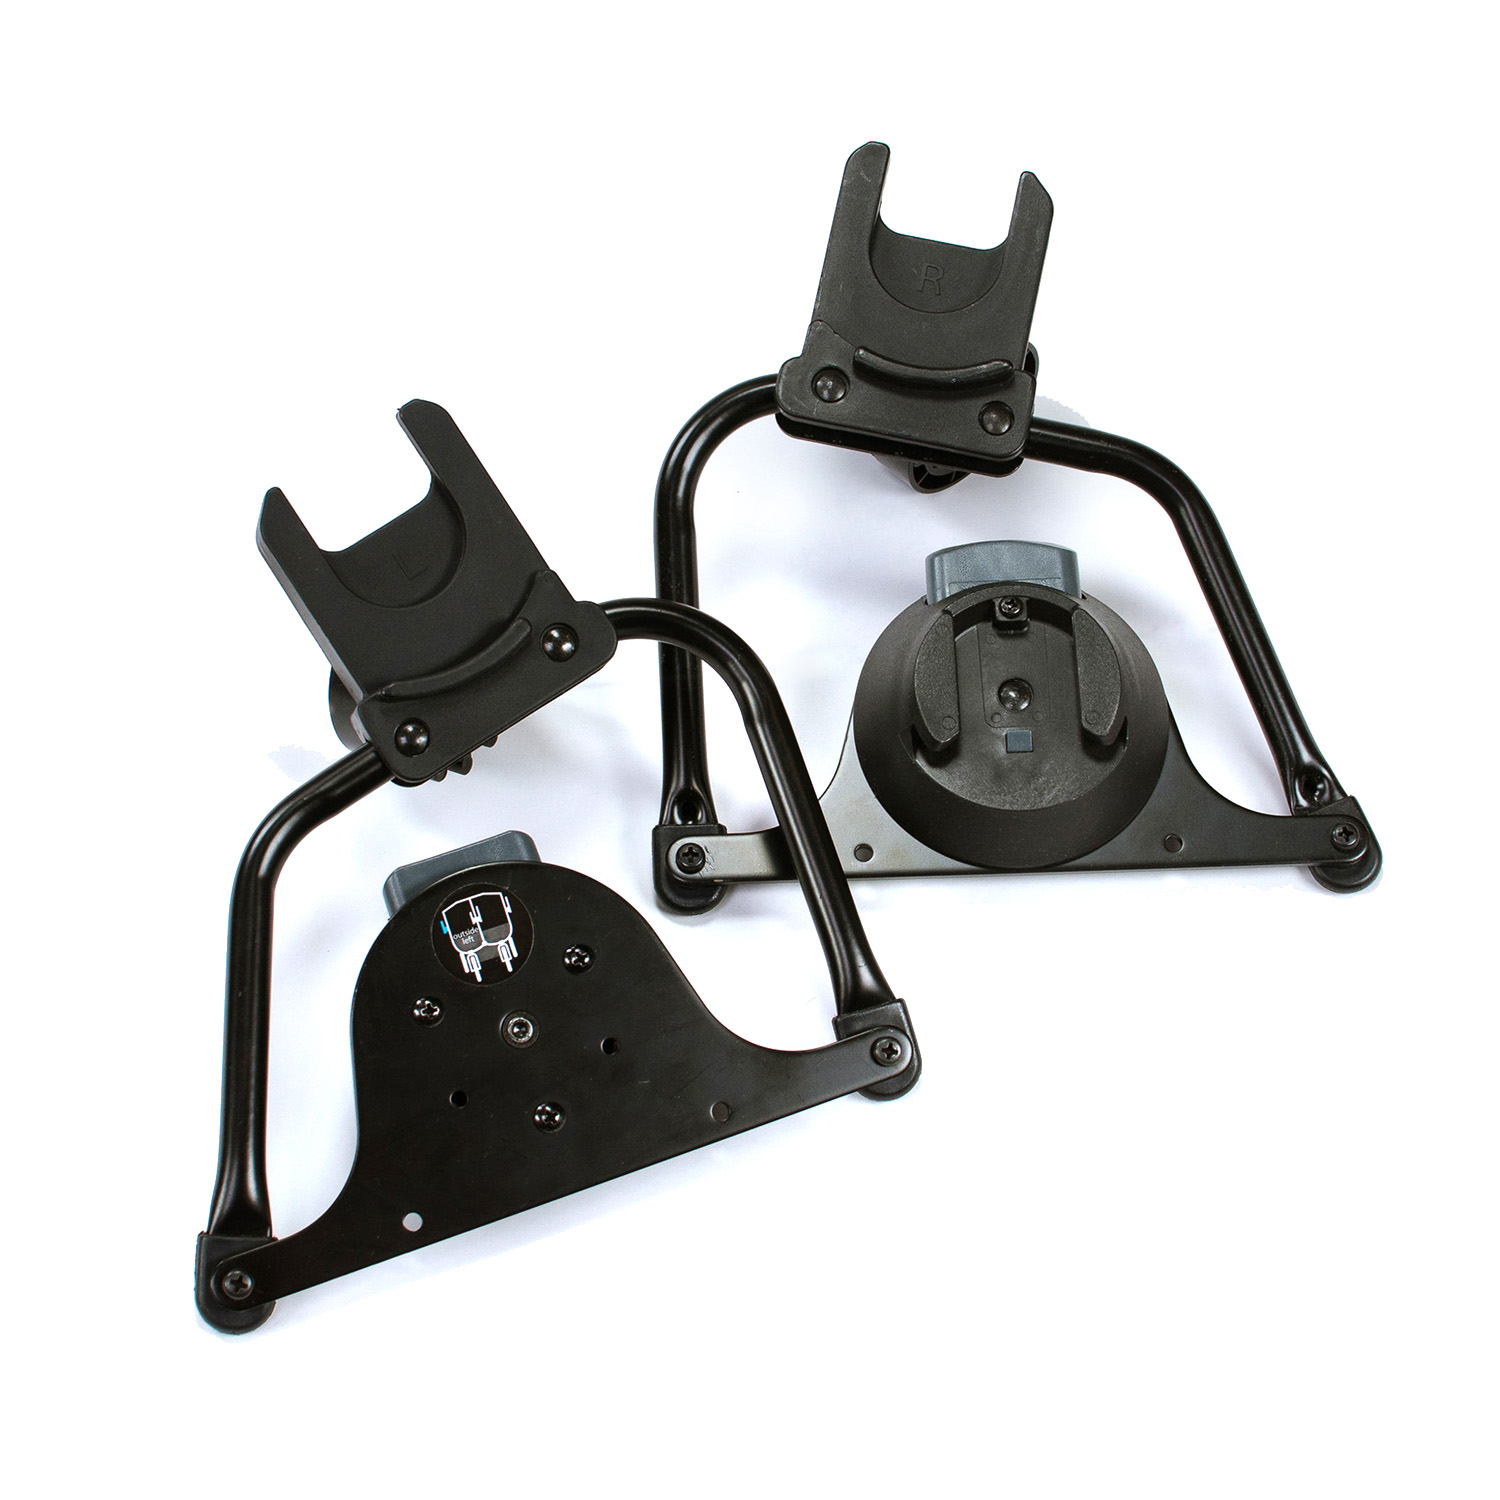 Адаптер Indie Twin car seat (нижний) Bumbleride адаптер для автокресла bumbleride indie twin car seat adapter single нижний